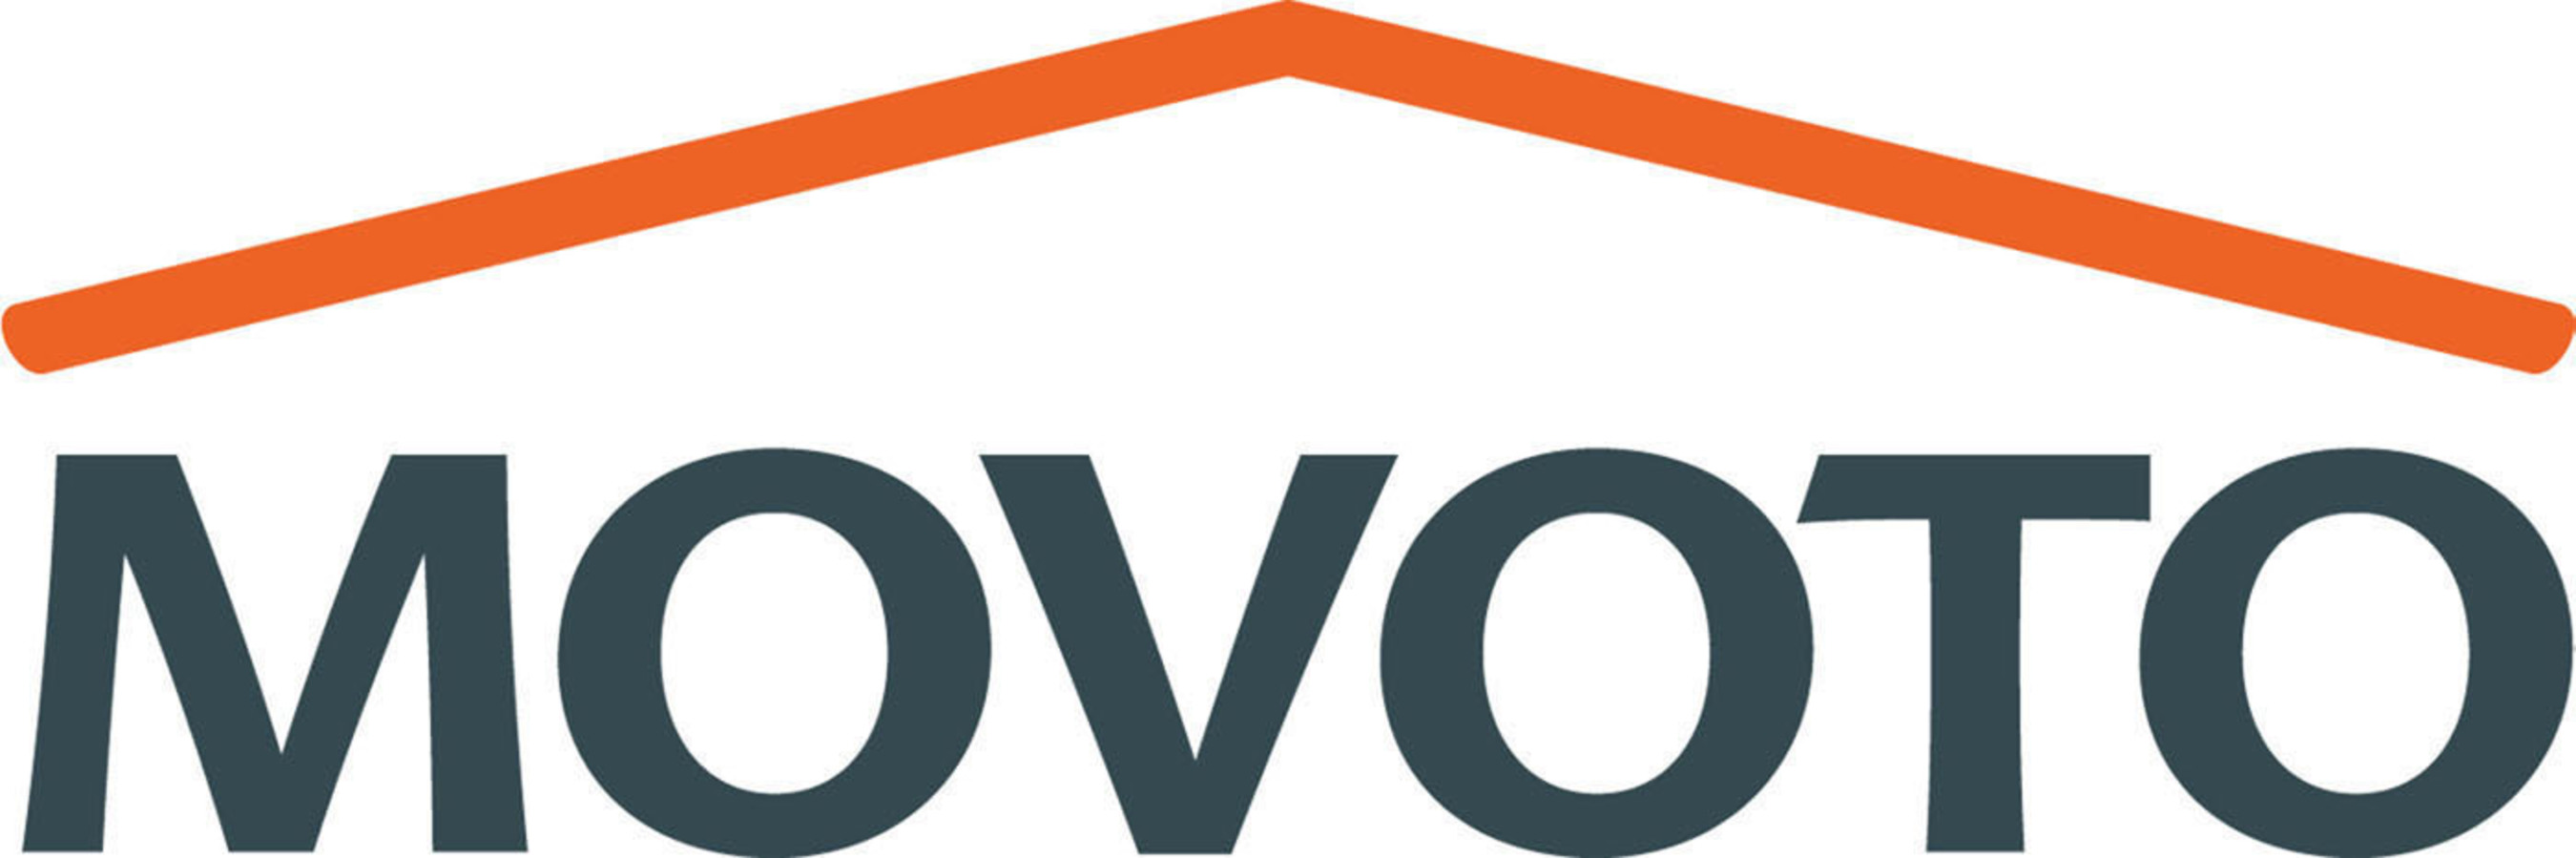 Movoto Online Real Estate.